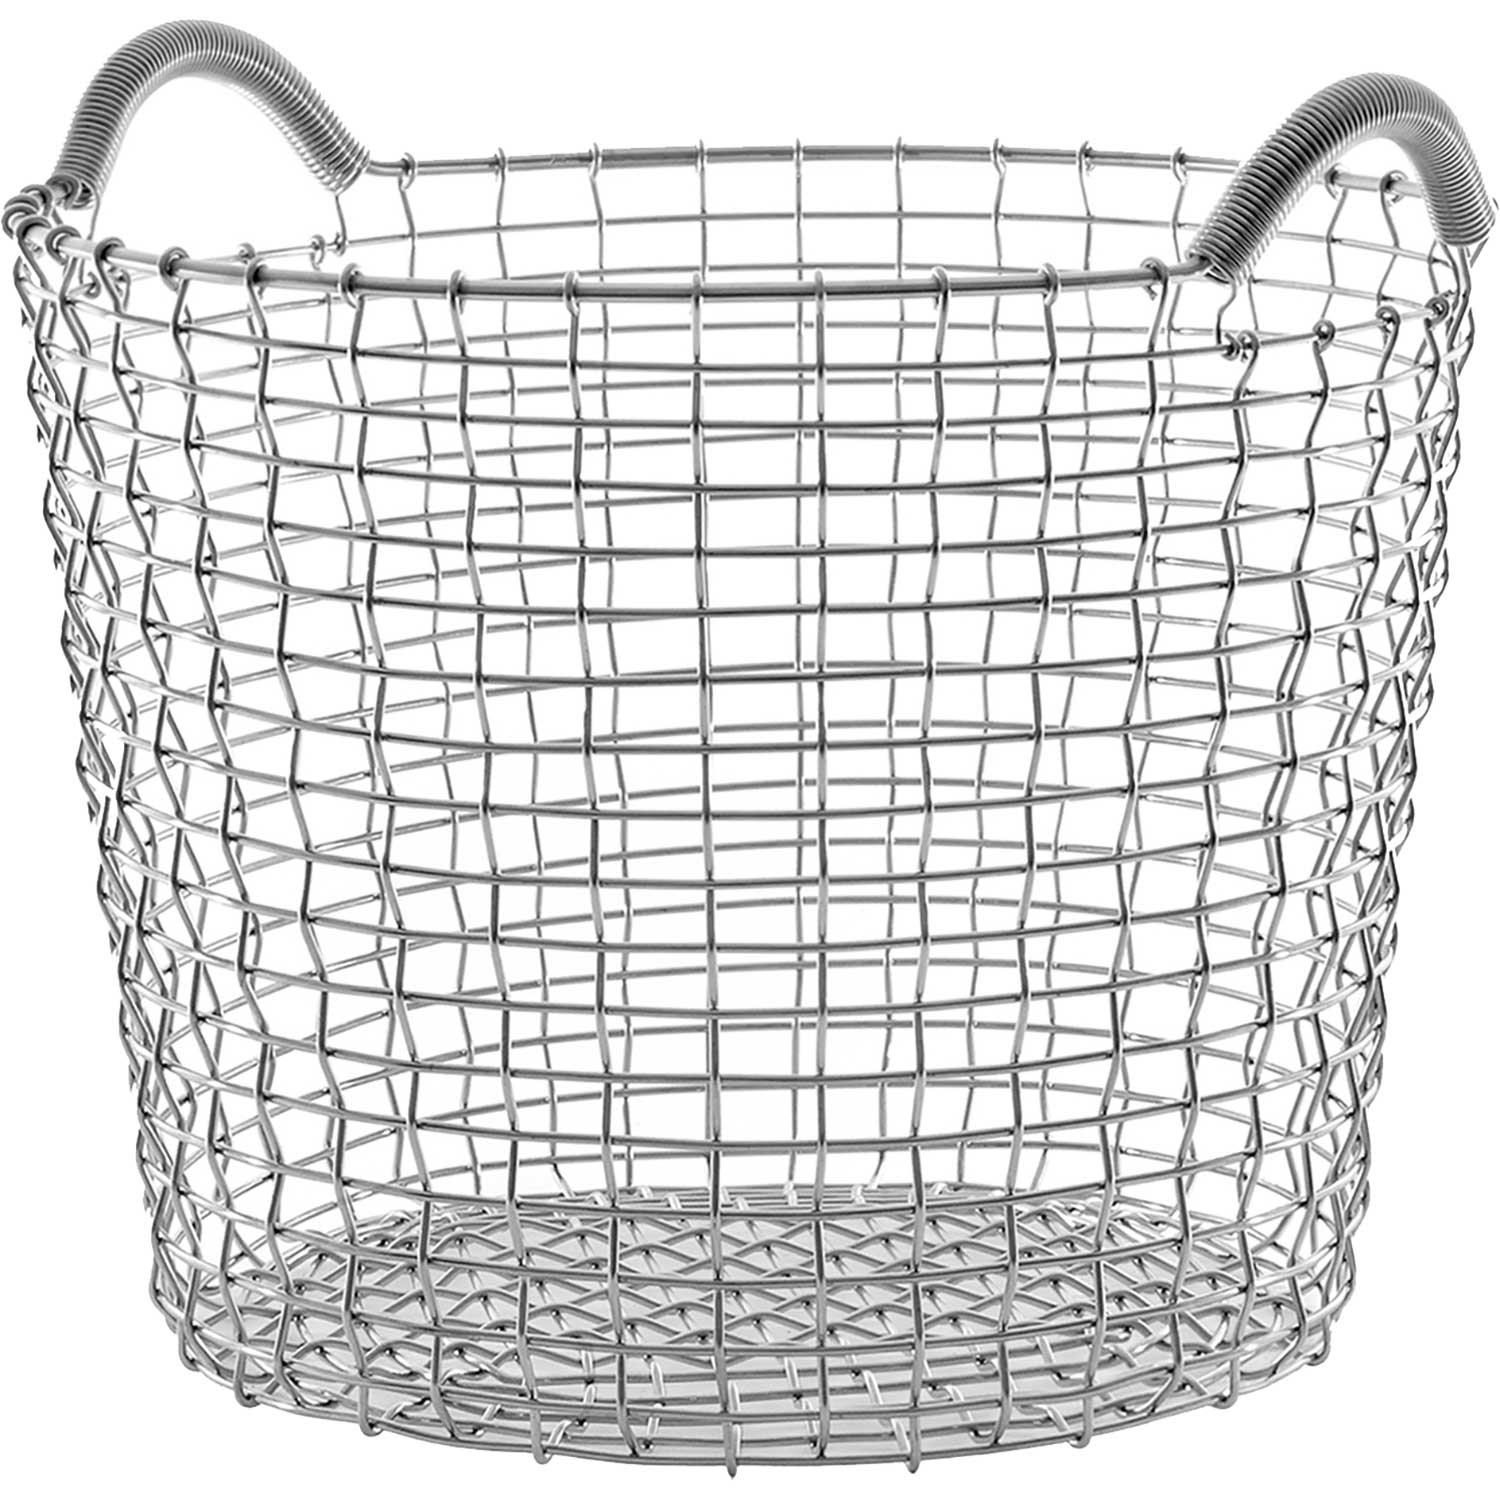 Korbo Classic 65 Basket Acid-Proof - Baskets Stainless Steel - 31030